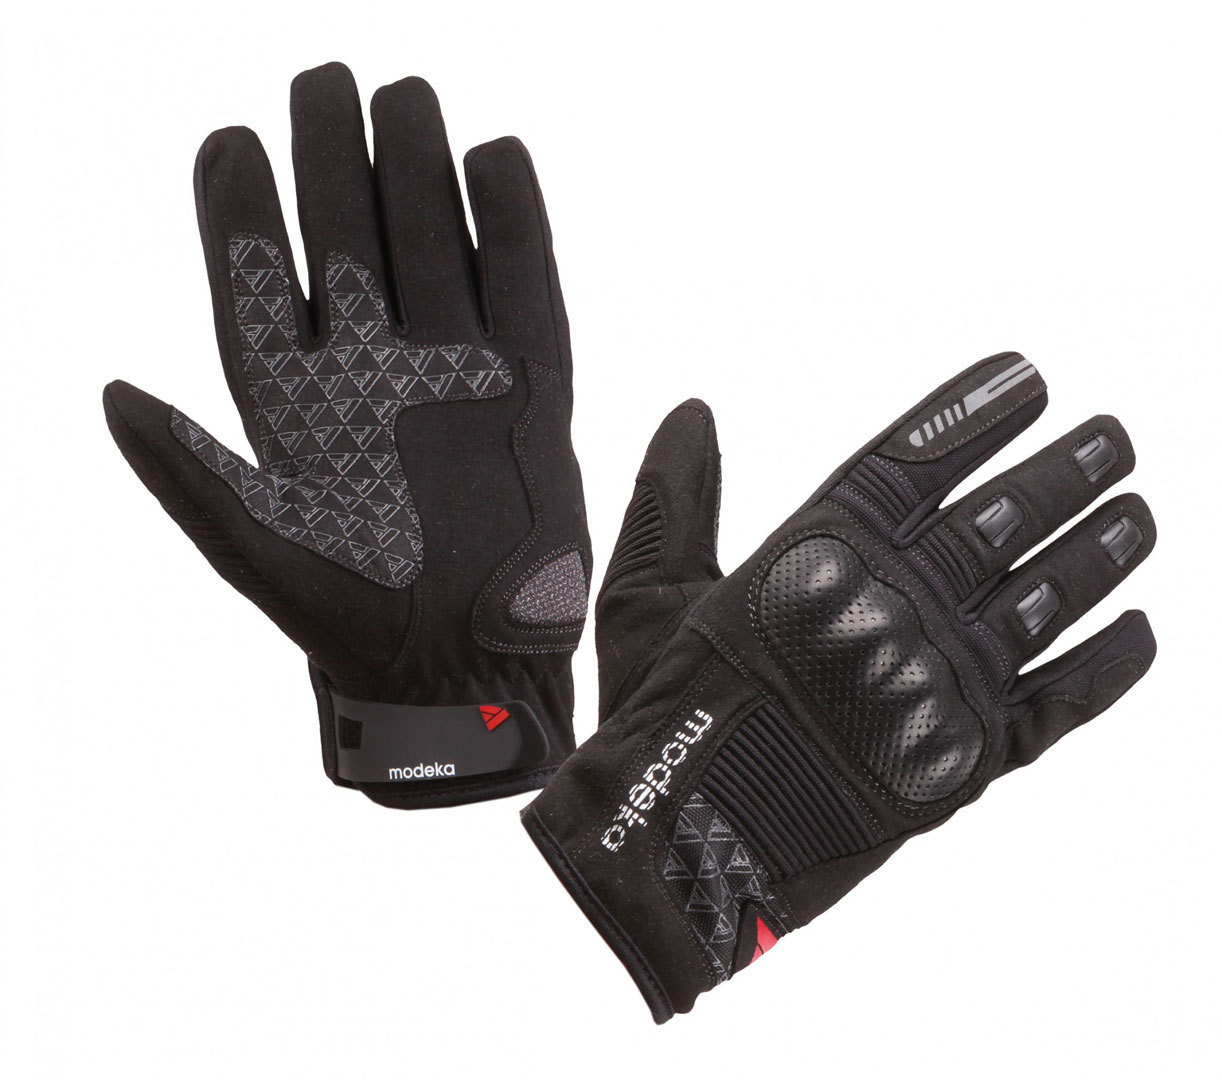 Modeka Fuego Motorcycle Gloves, black, Size M L, black, Size M L